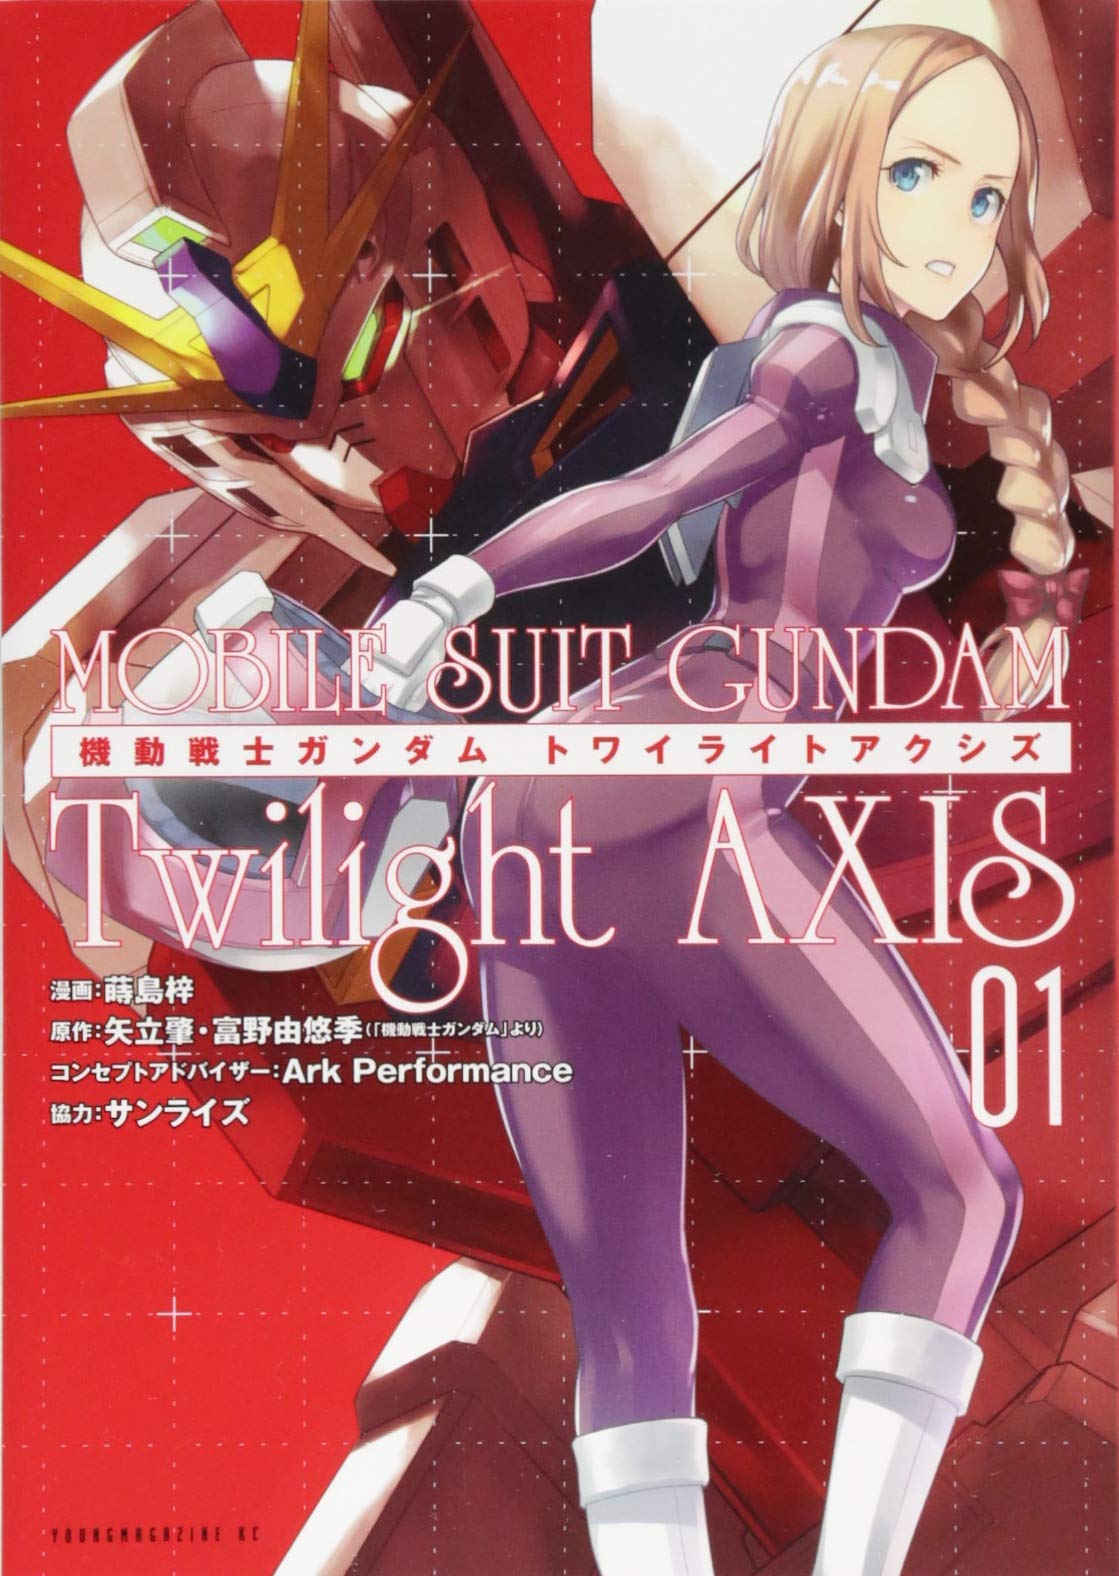 Gundam Twilight AXIS comic cover 1.jpg